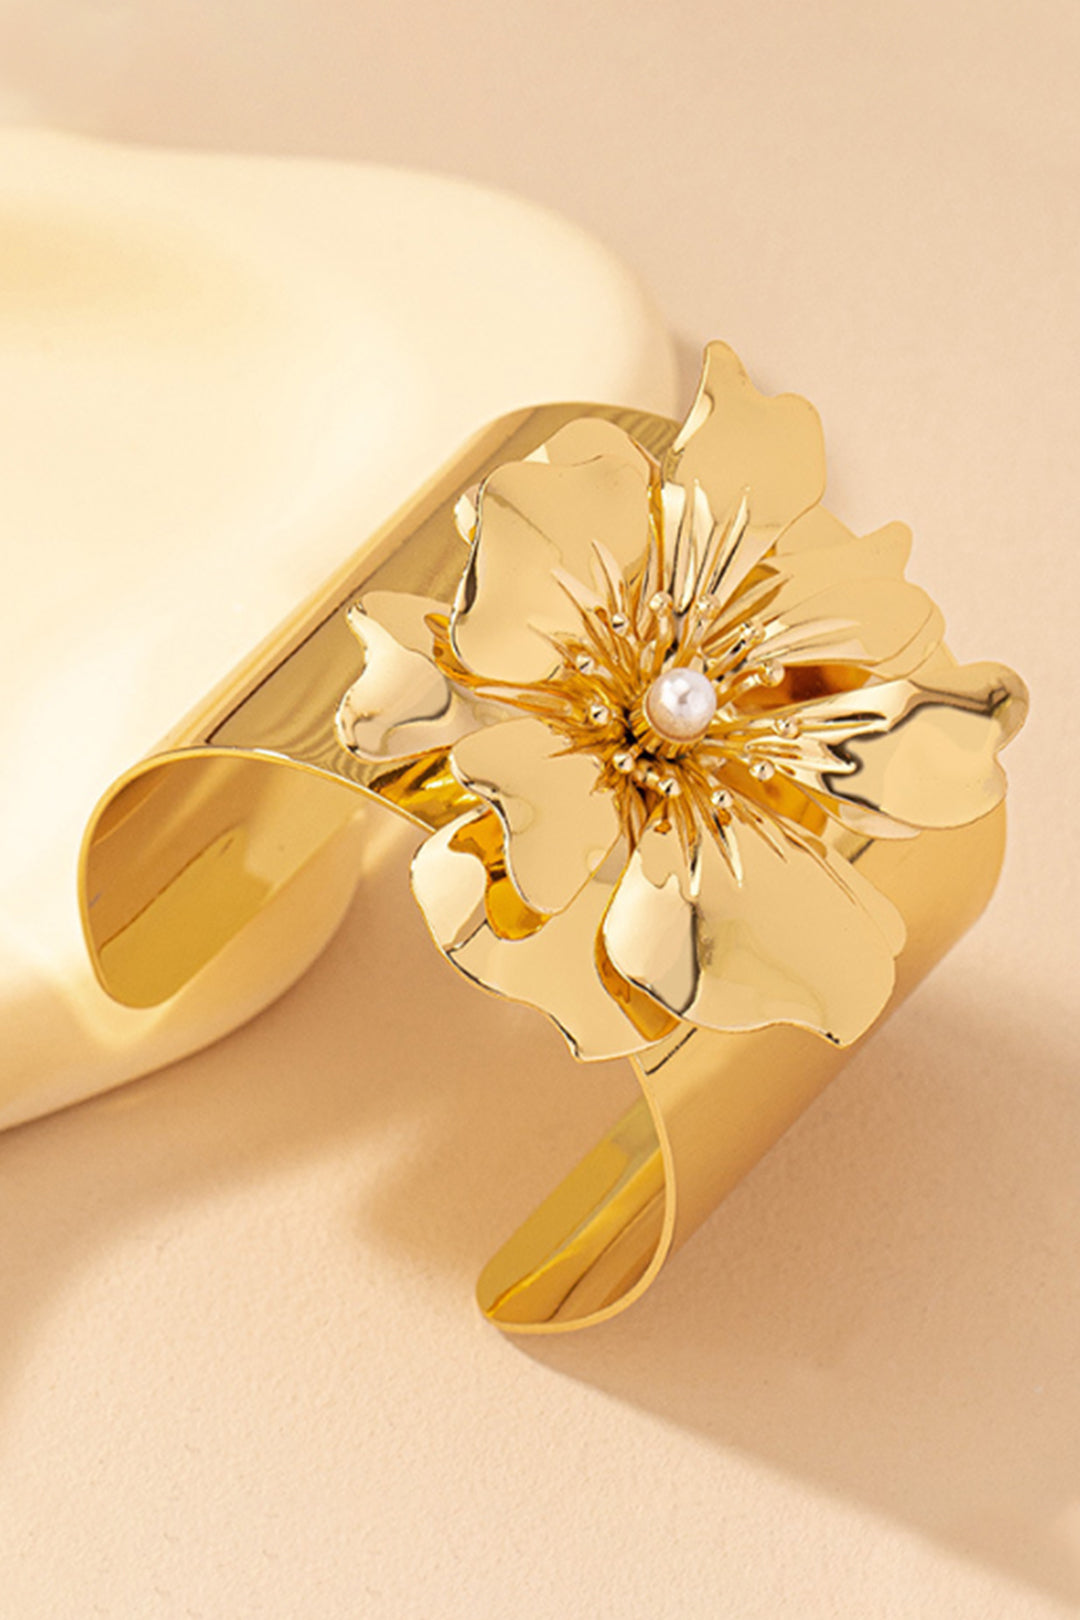 Floral Cuff Bracelet